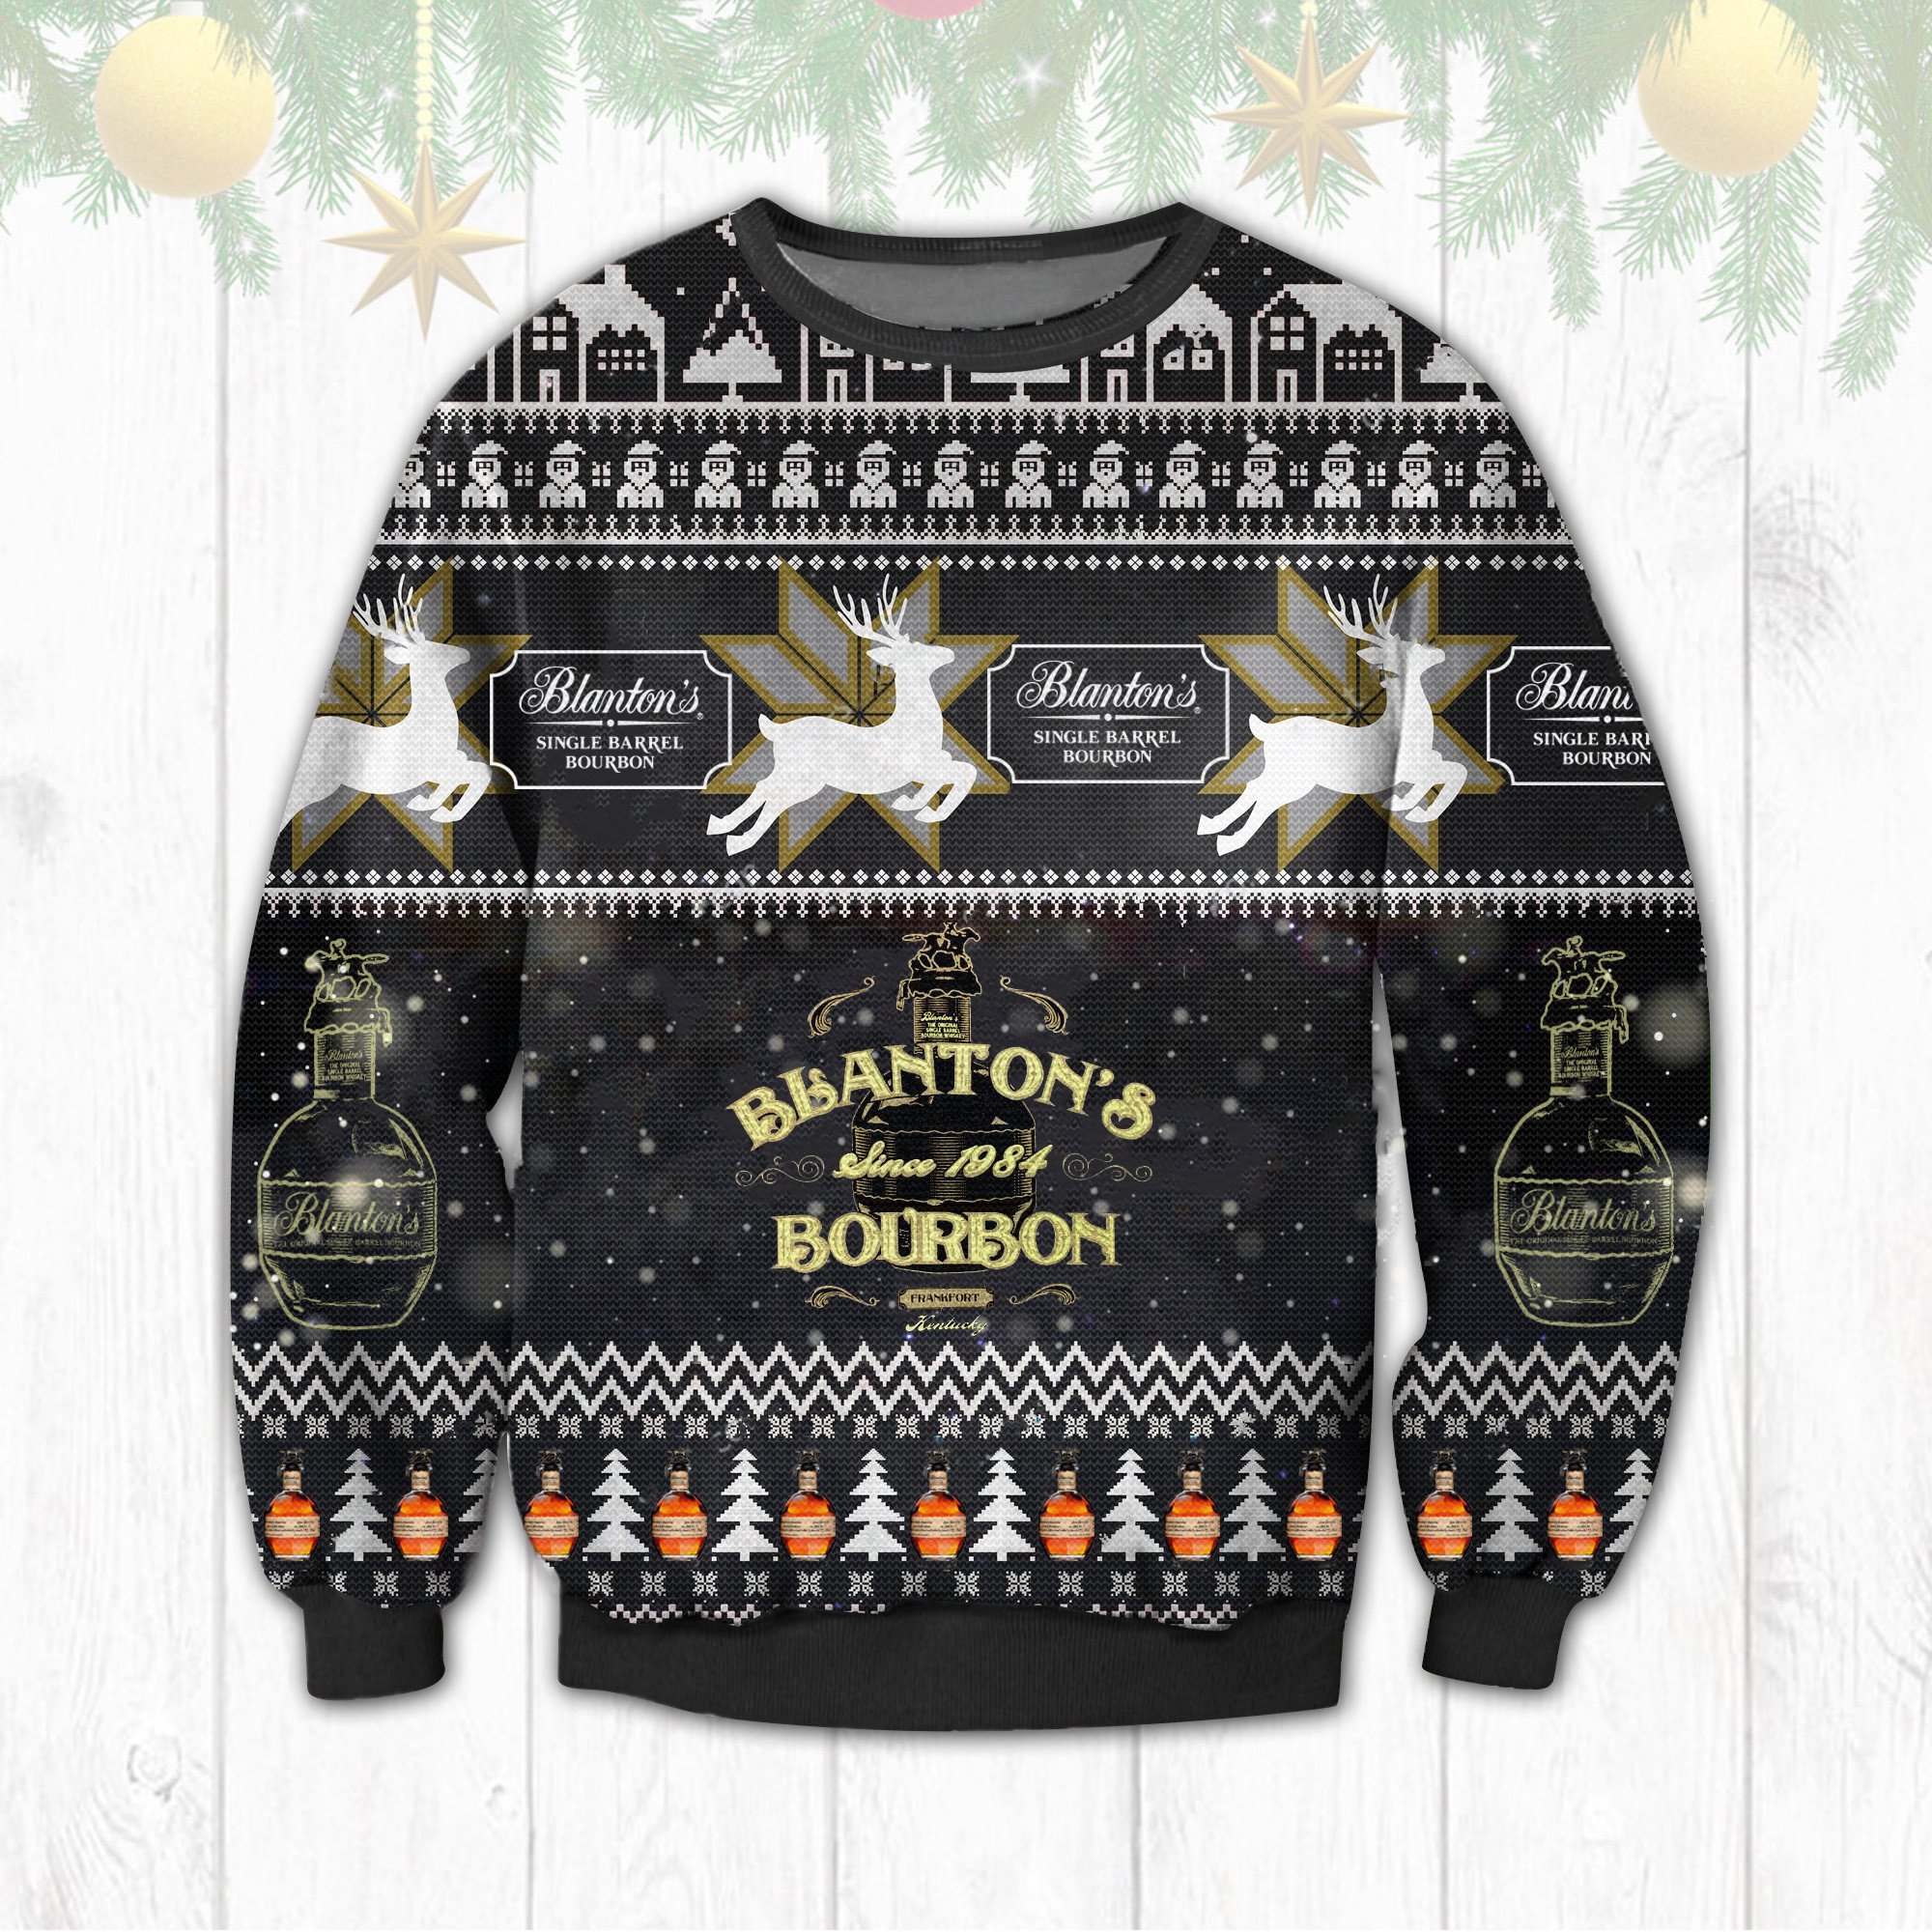 HOT Blanton's Bourbon Since 1984 ugly Christmas sweater 9